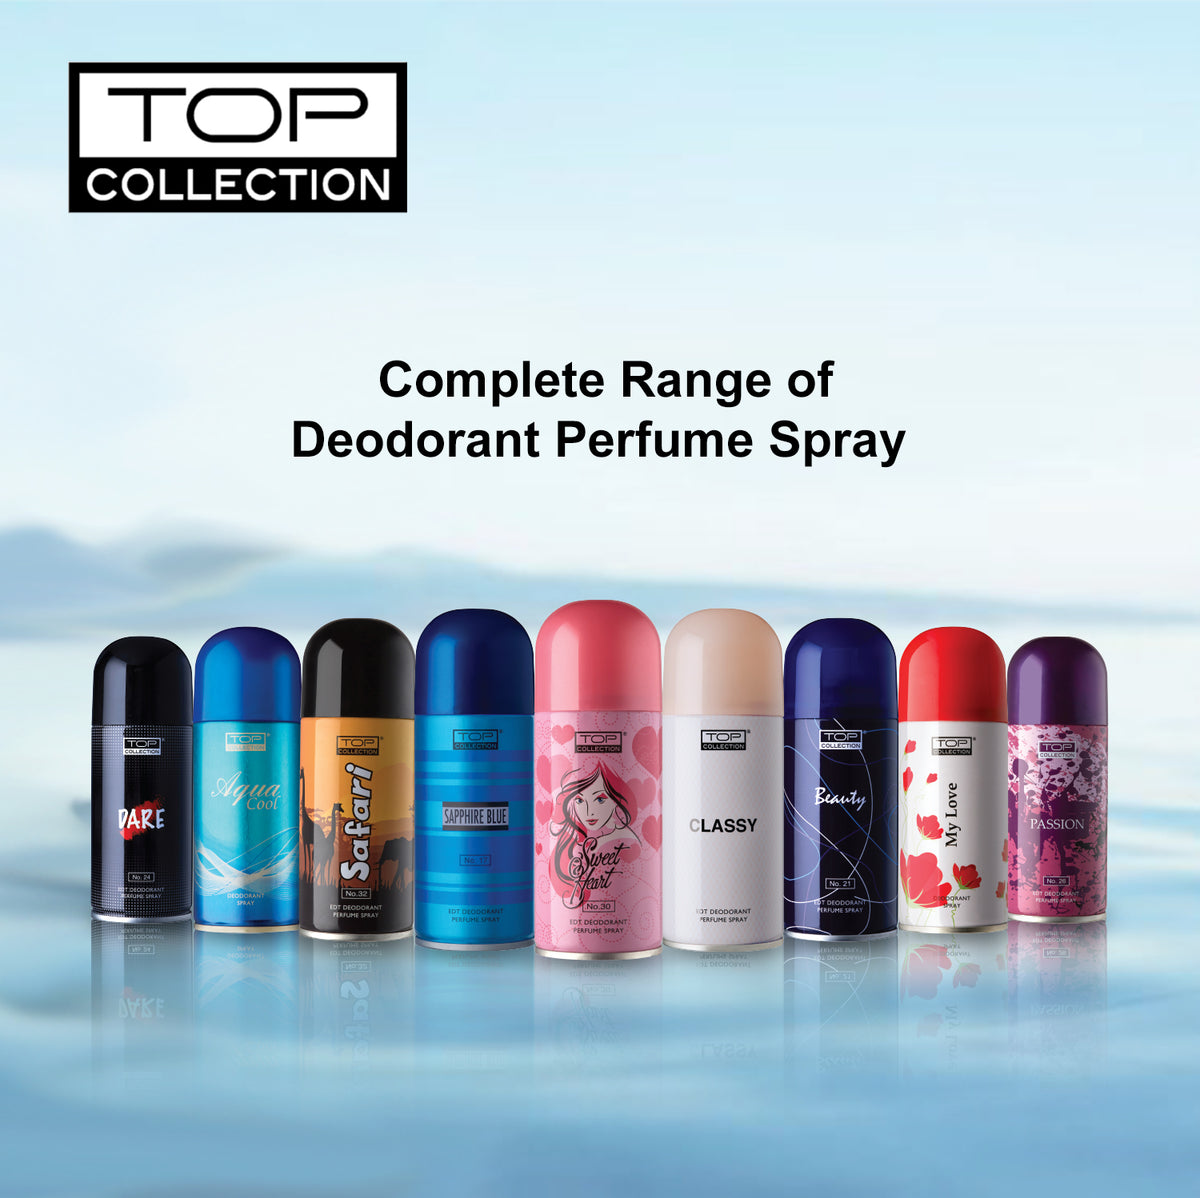 Top Collection Eau De Toilette Deodrant Perfume Spray - My Love, 150ml